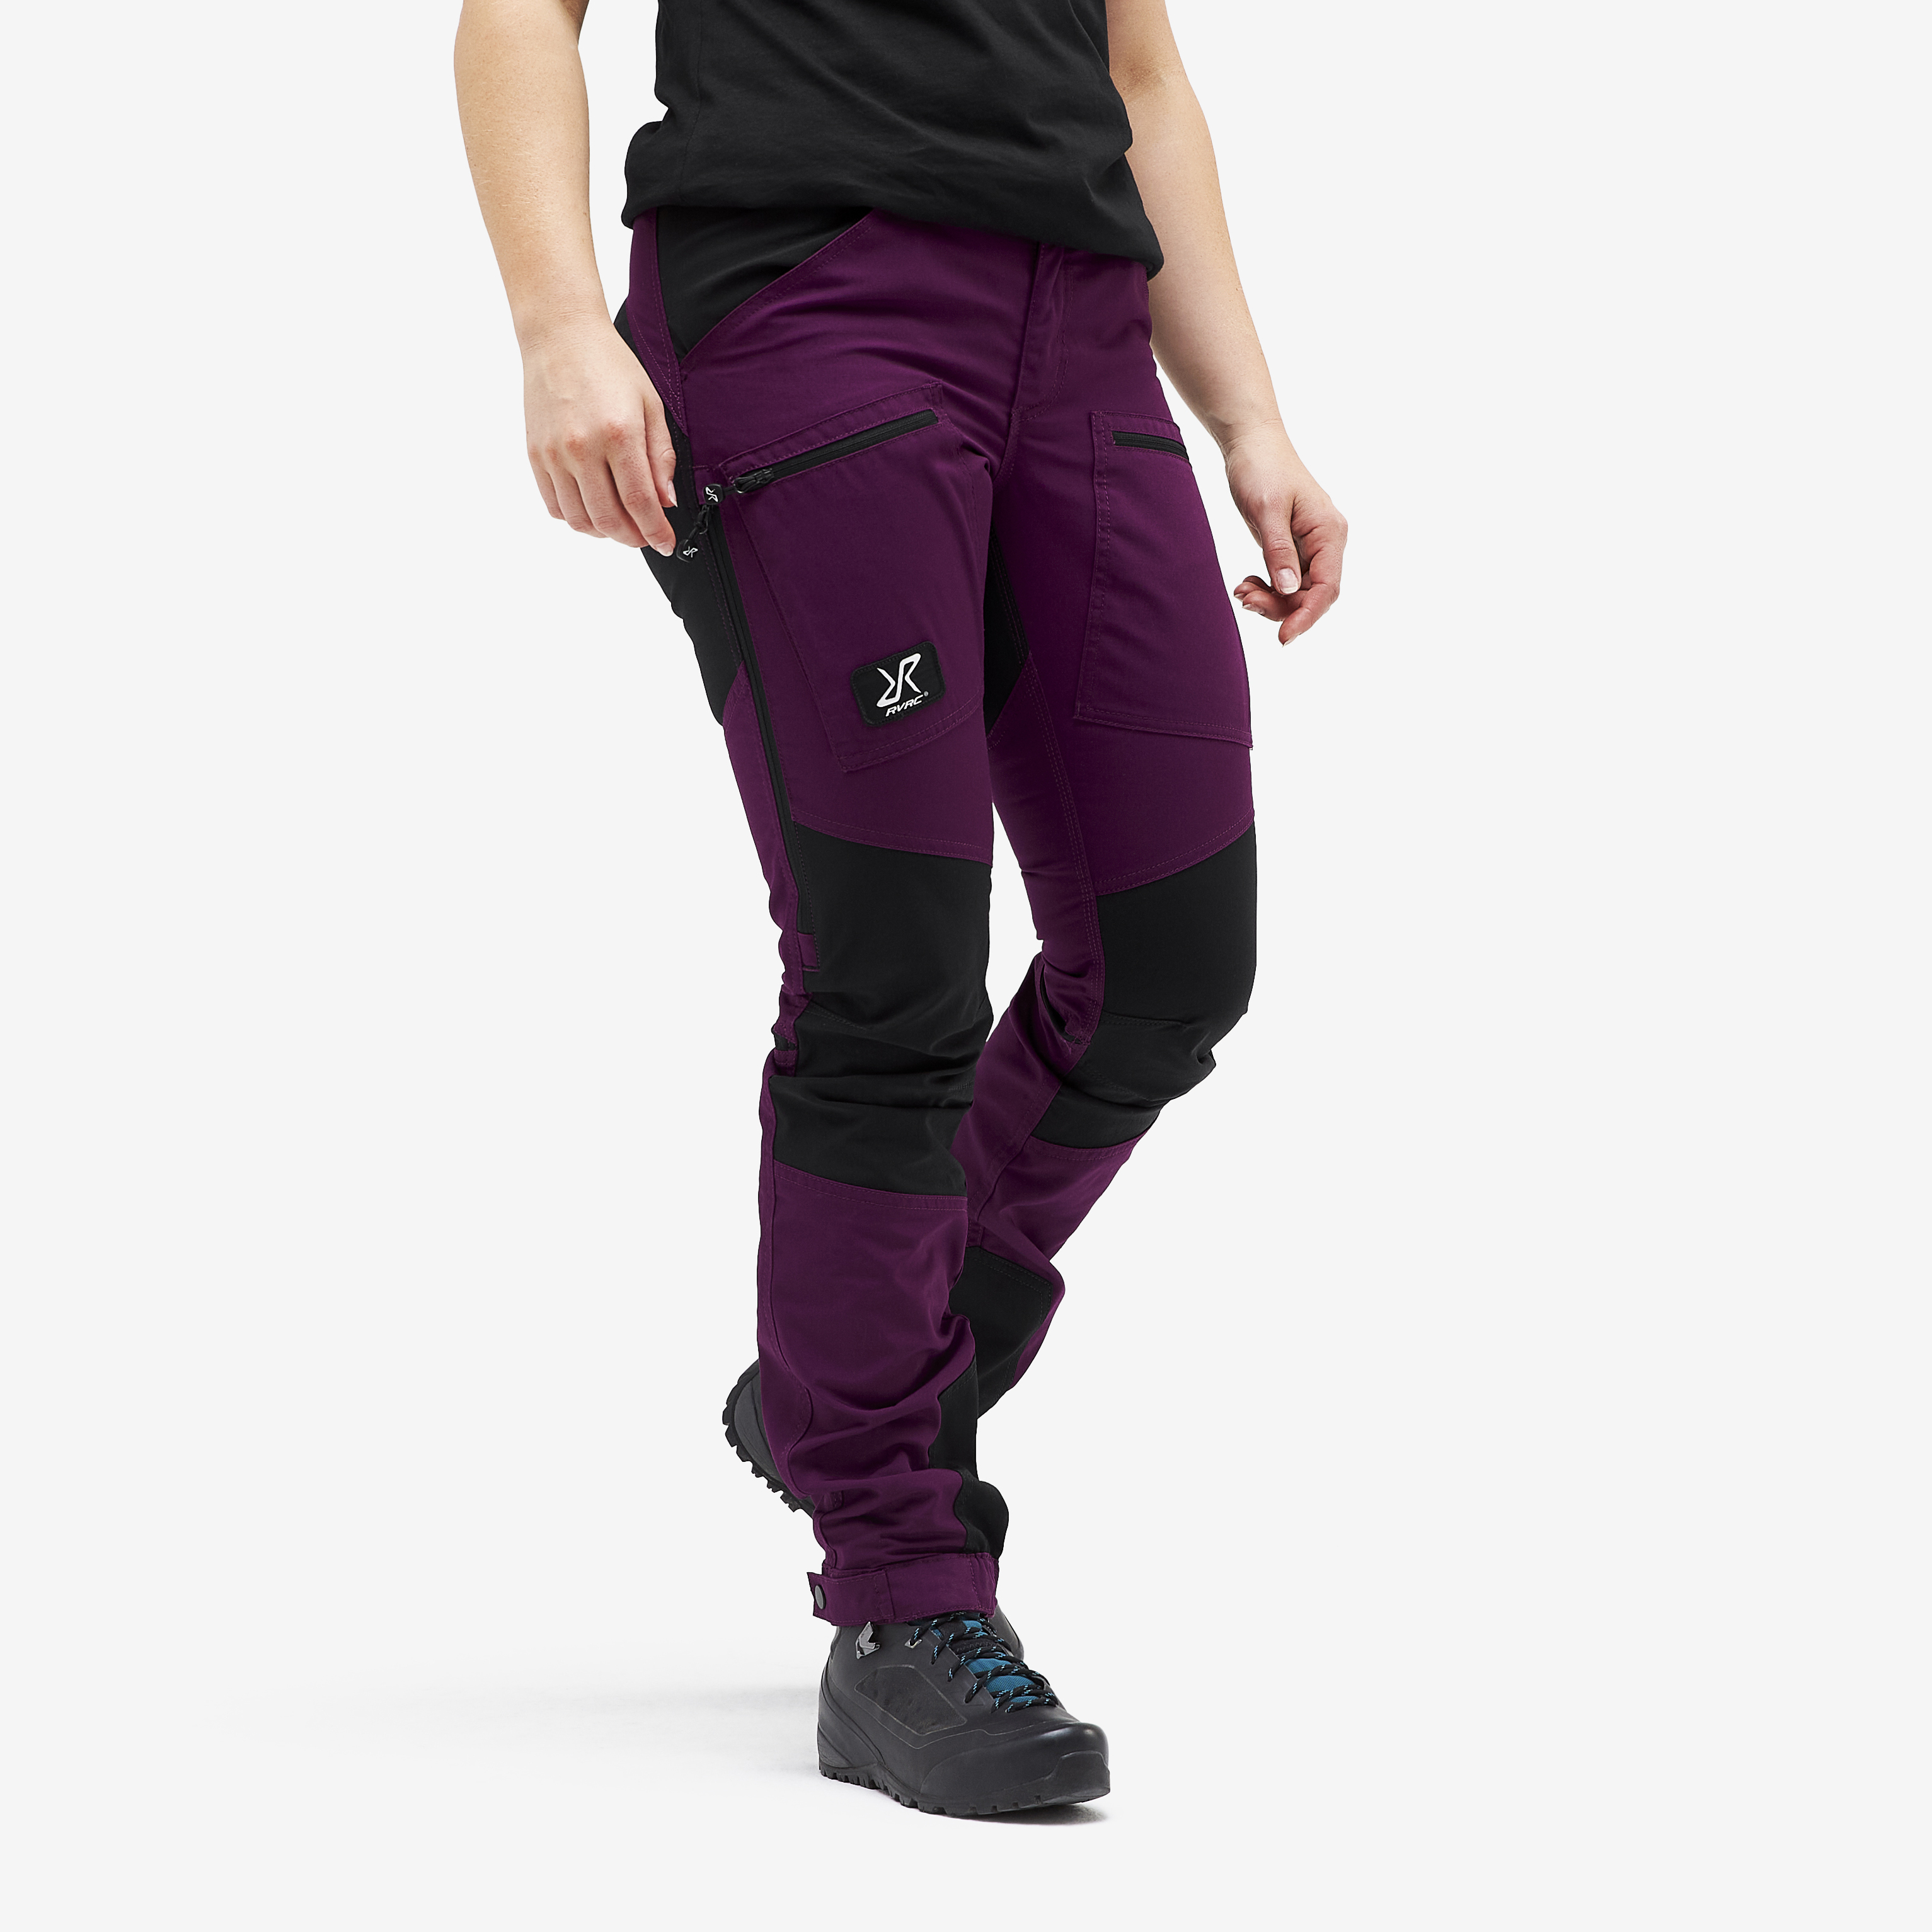 Nordwand Pro Trousers Purple Rain Women